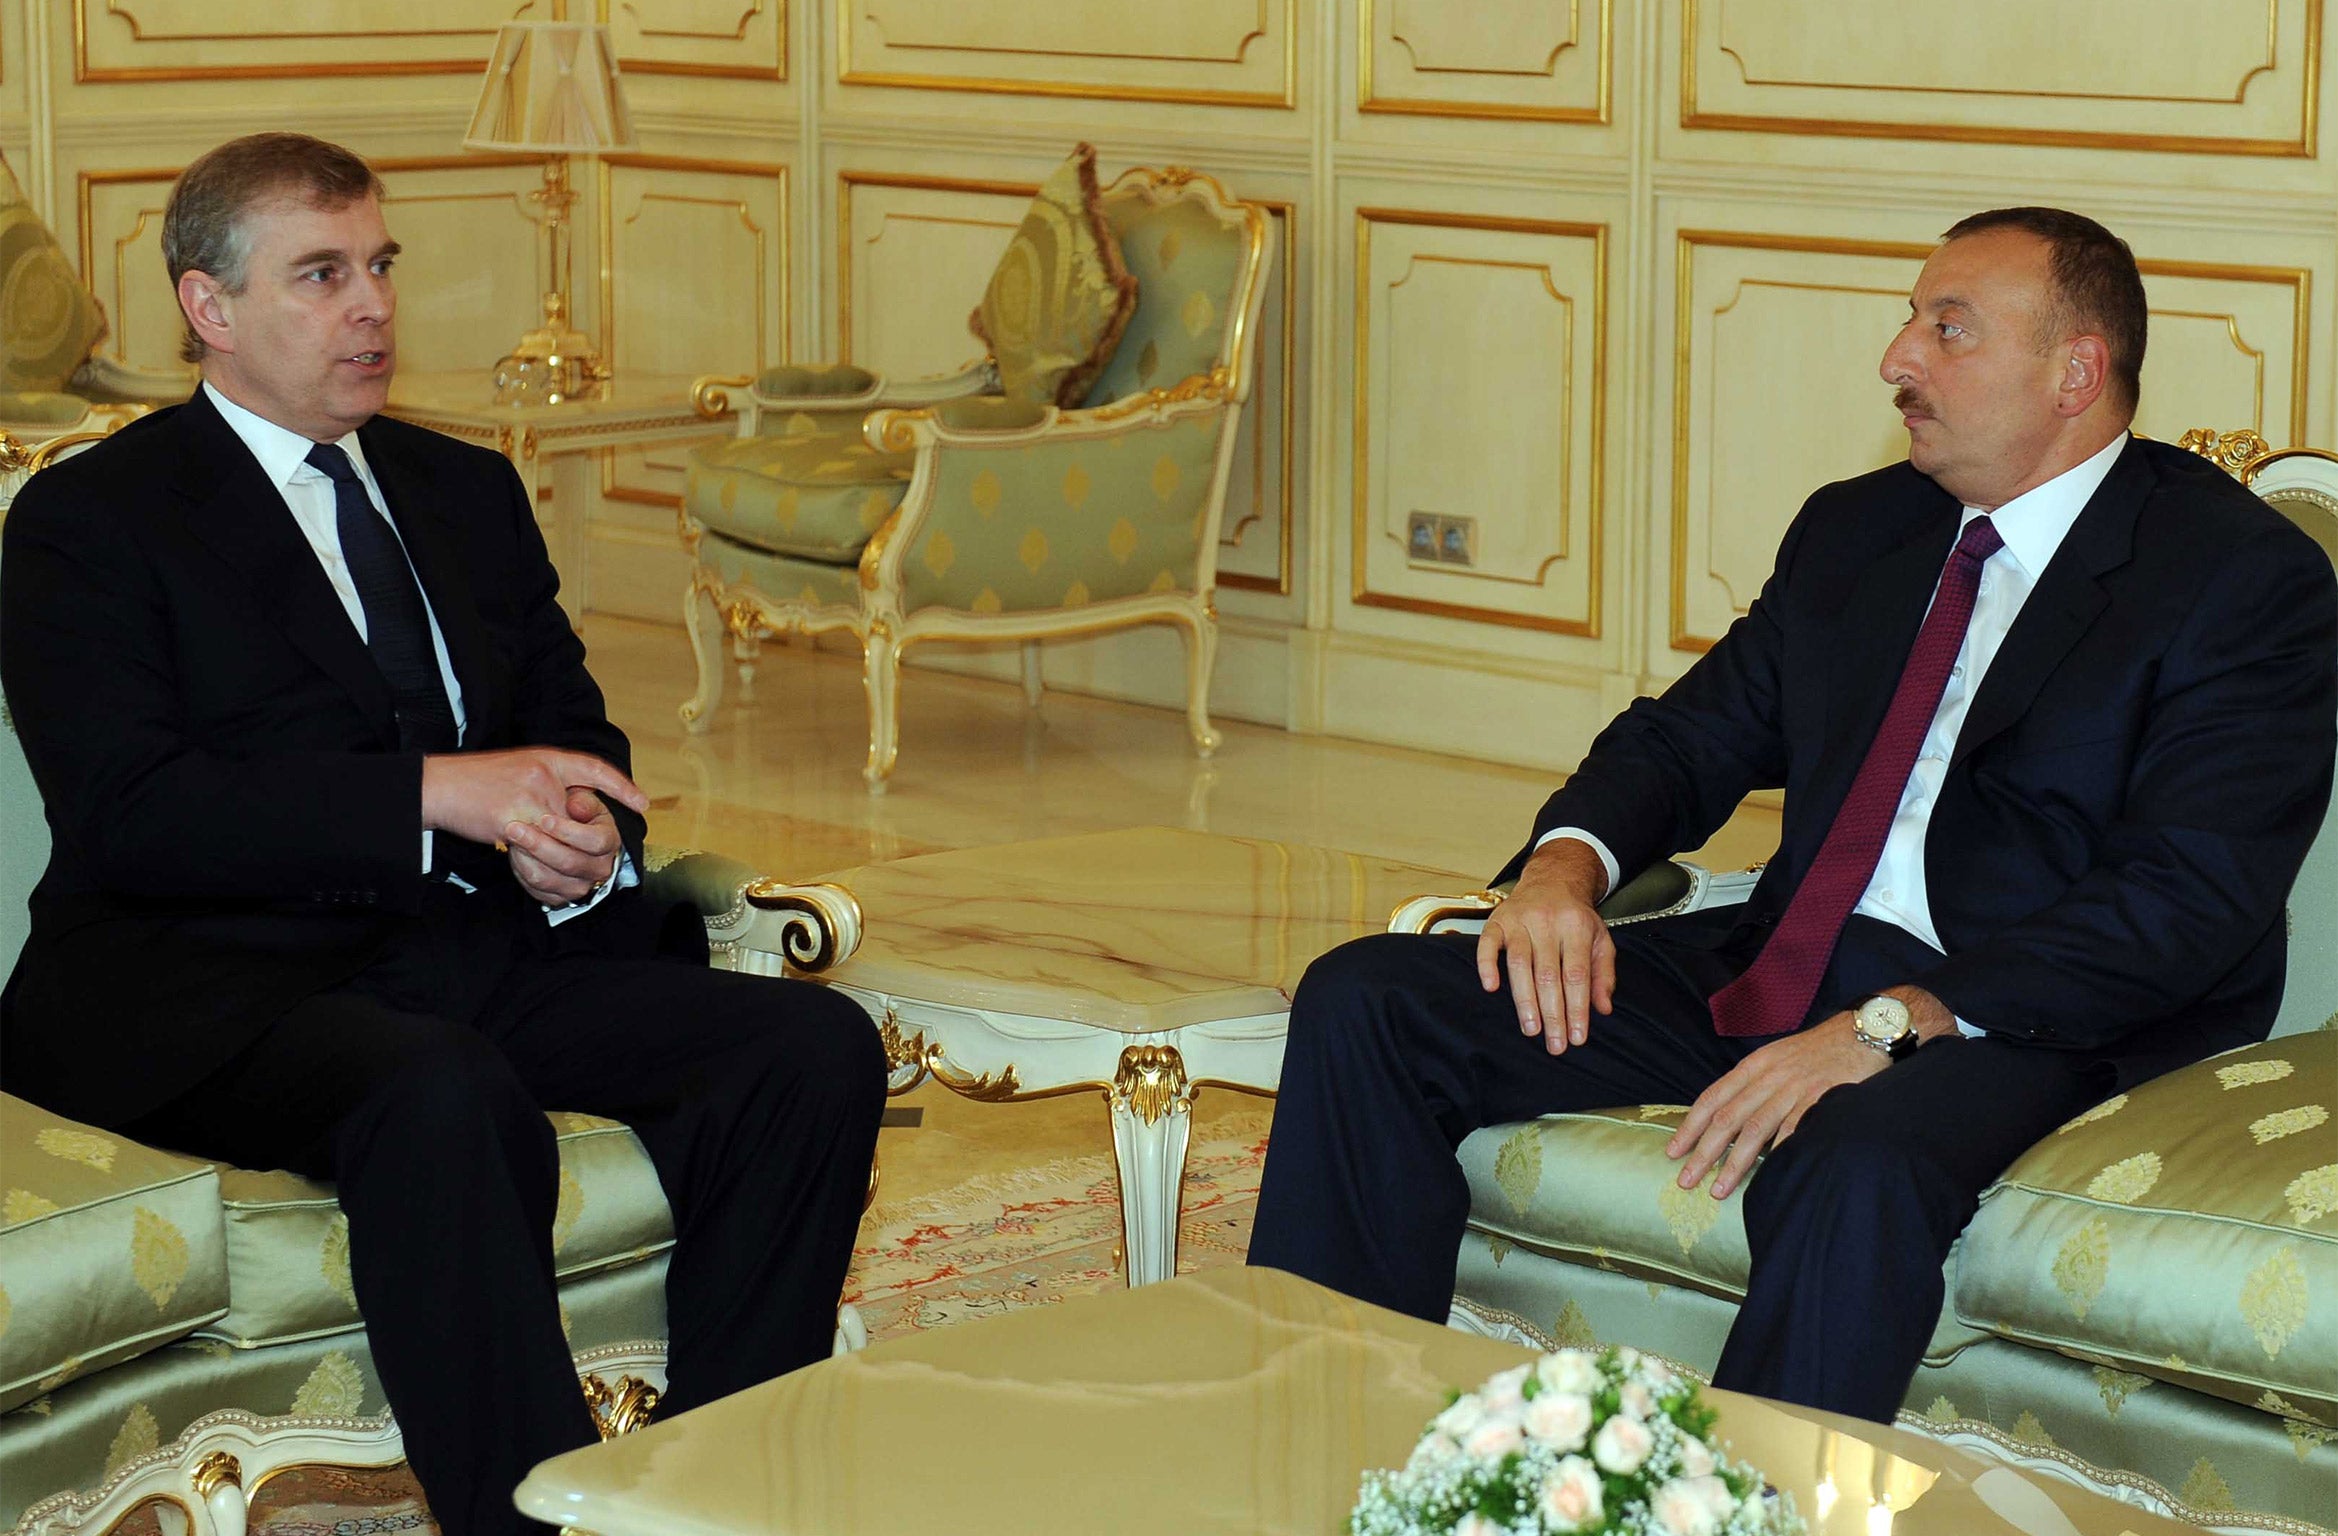 Ilham Aliyev, president of Azerbaijan, with Prince Andrew in 2009